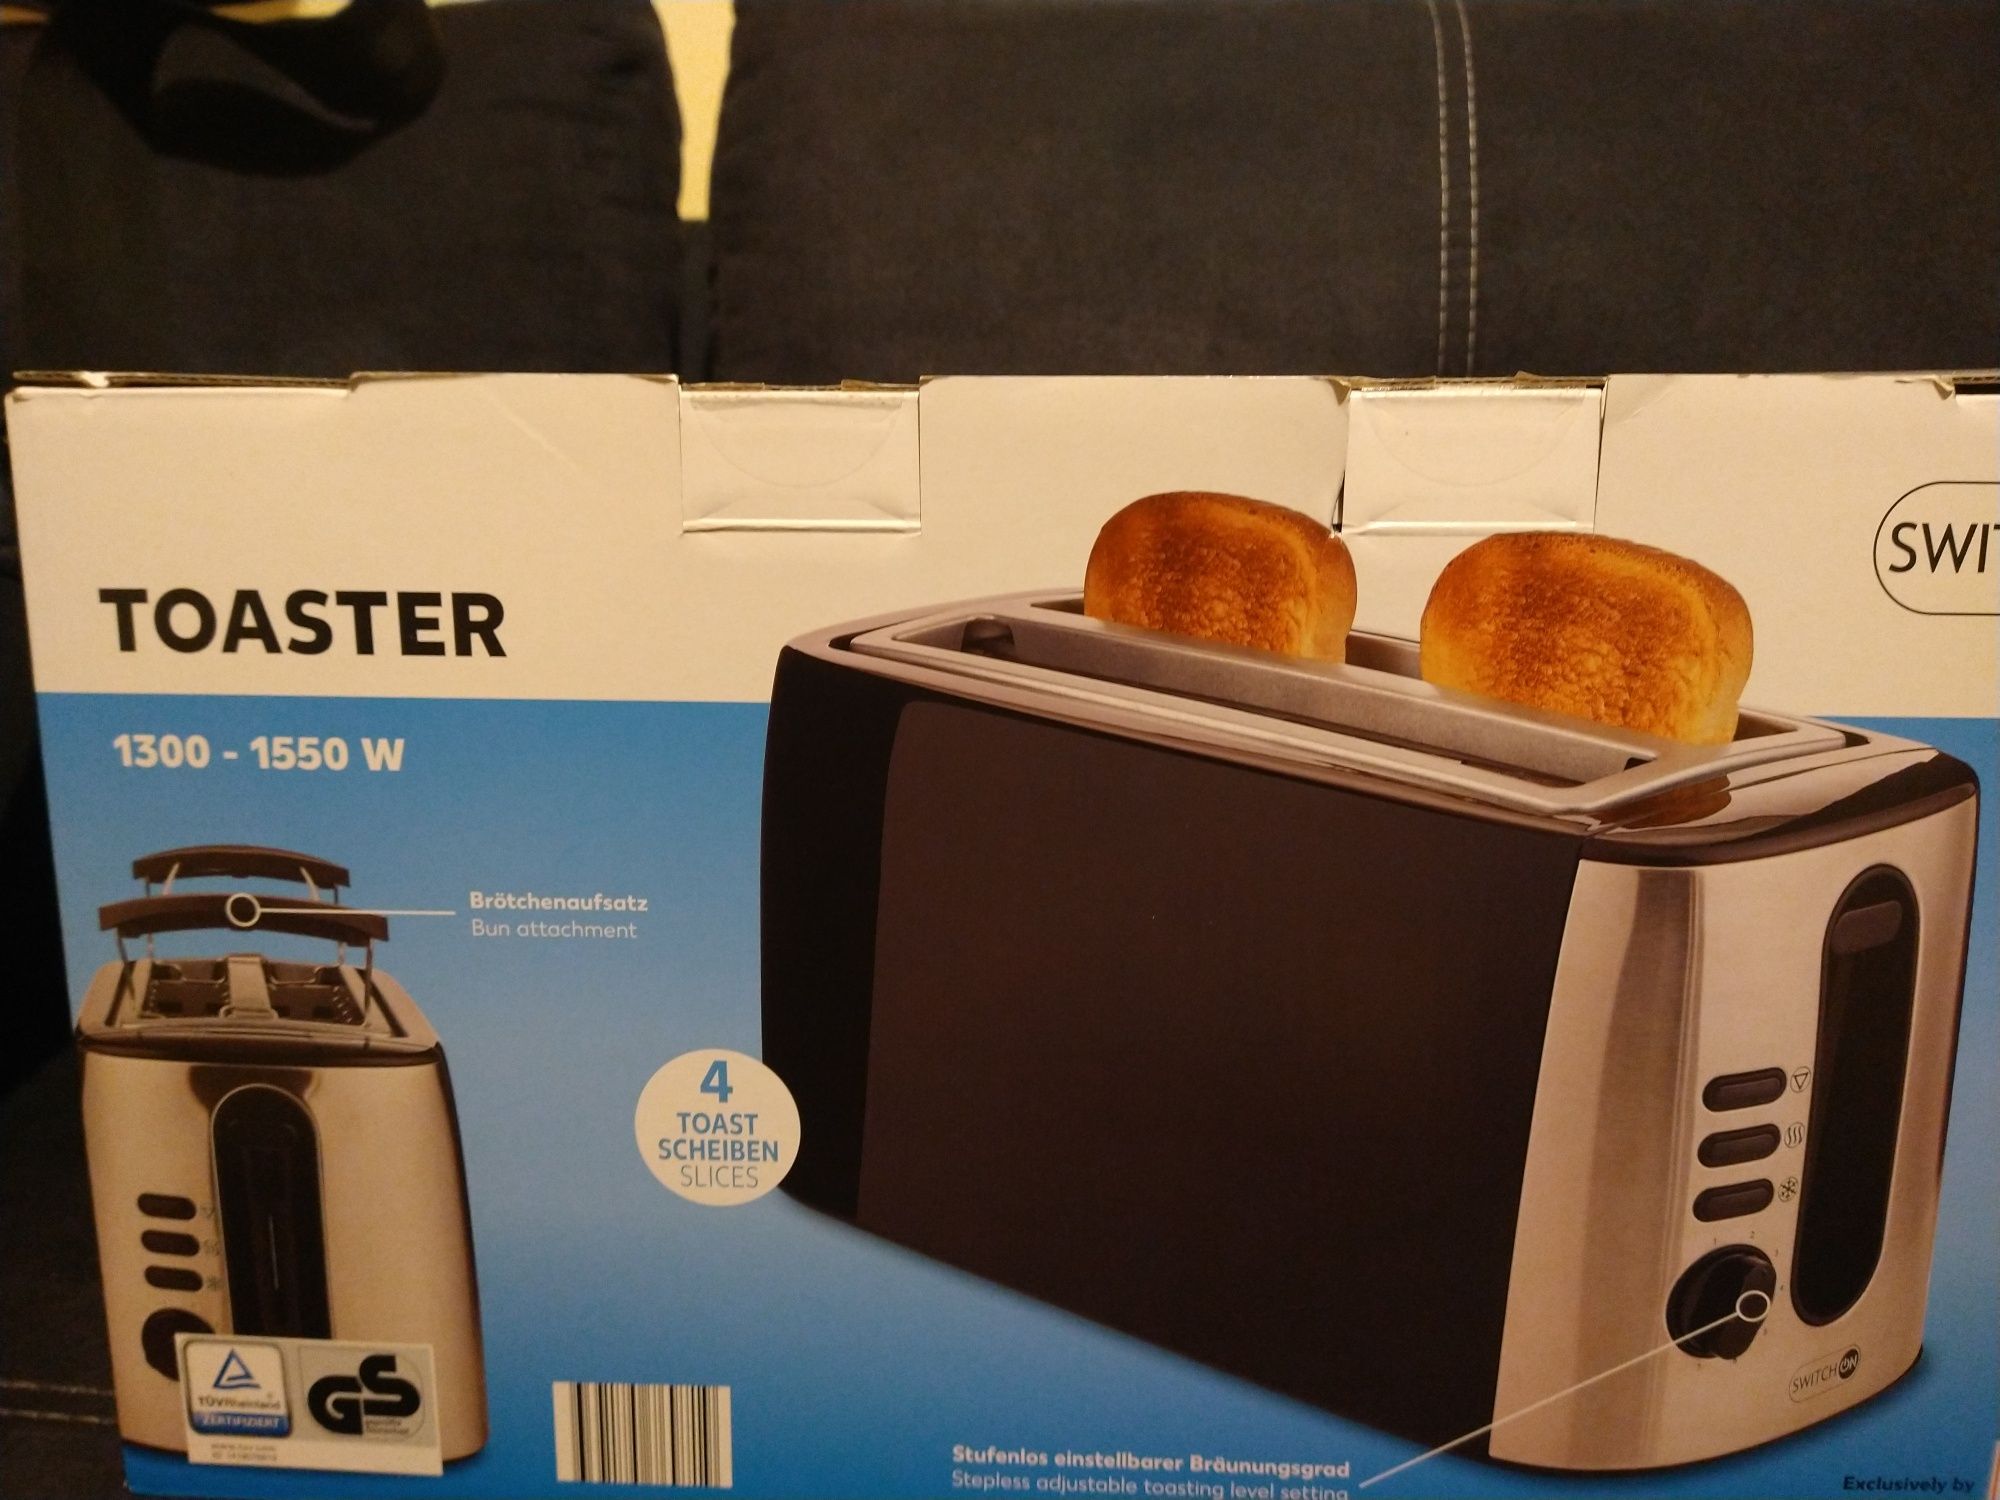 Toaster Switch On na 4 tosty